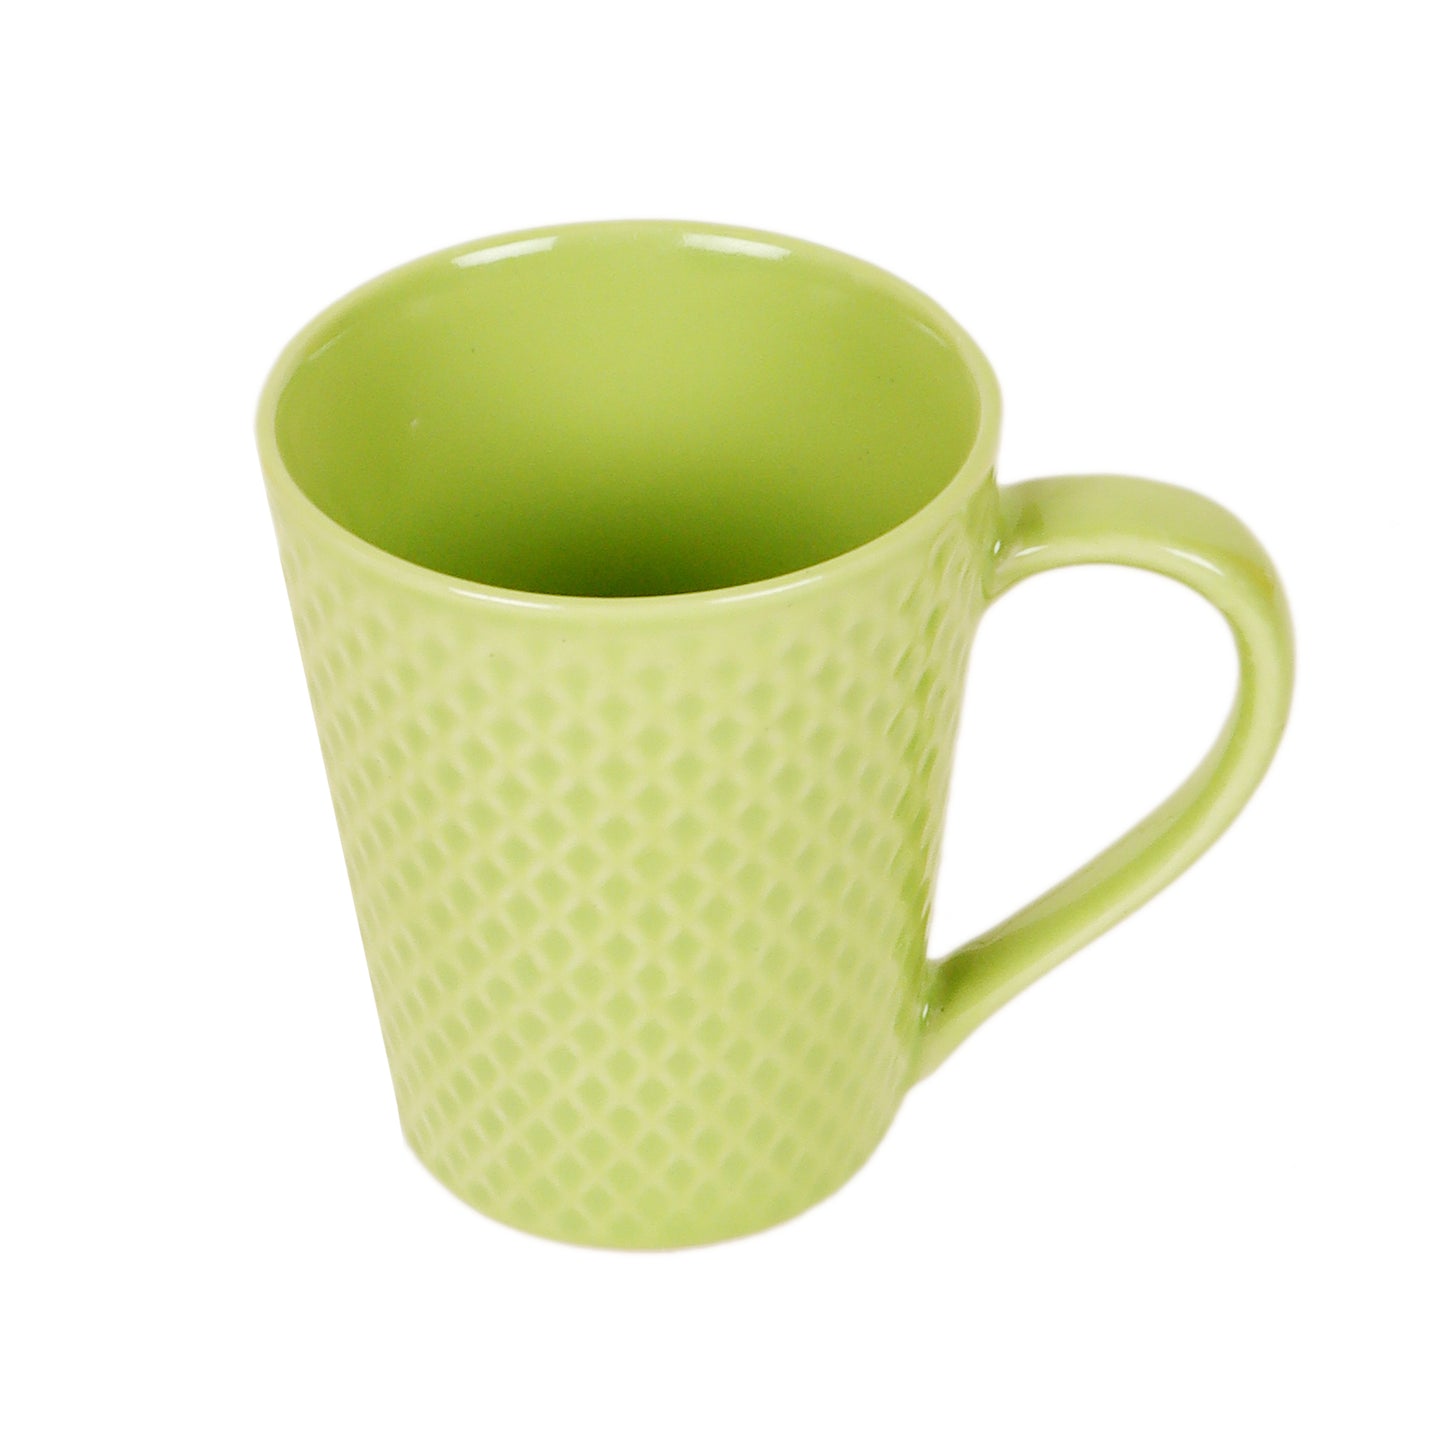 Mint Green Coffee Mugs Set of 2